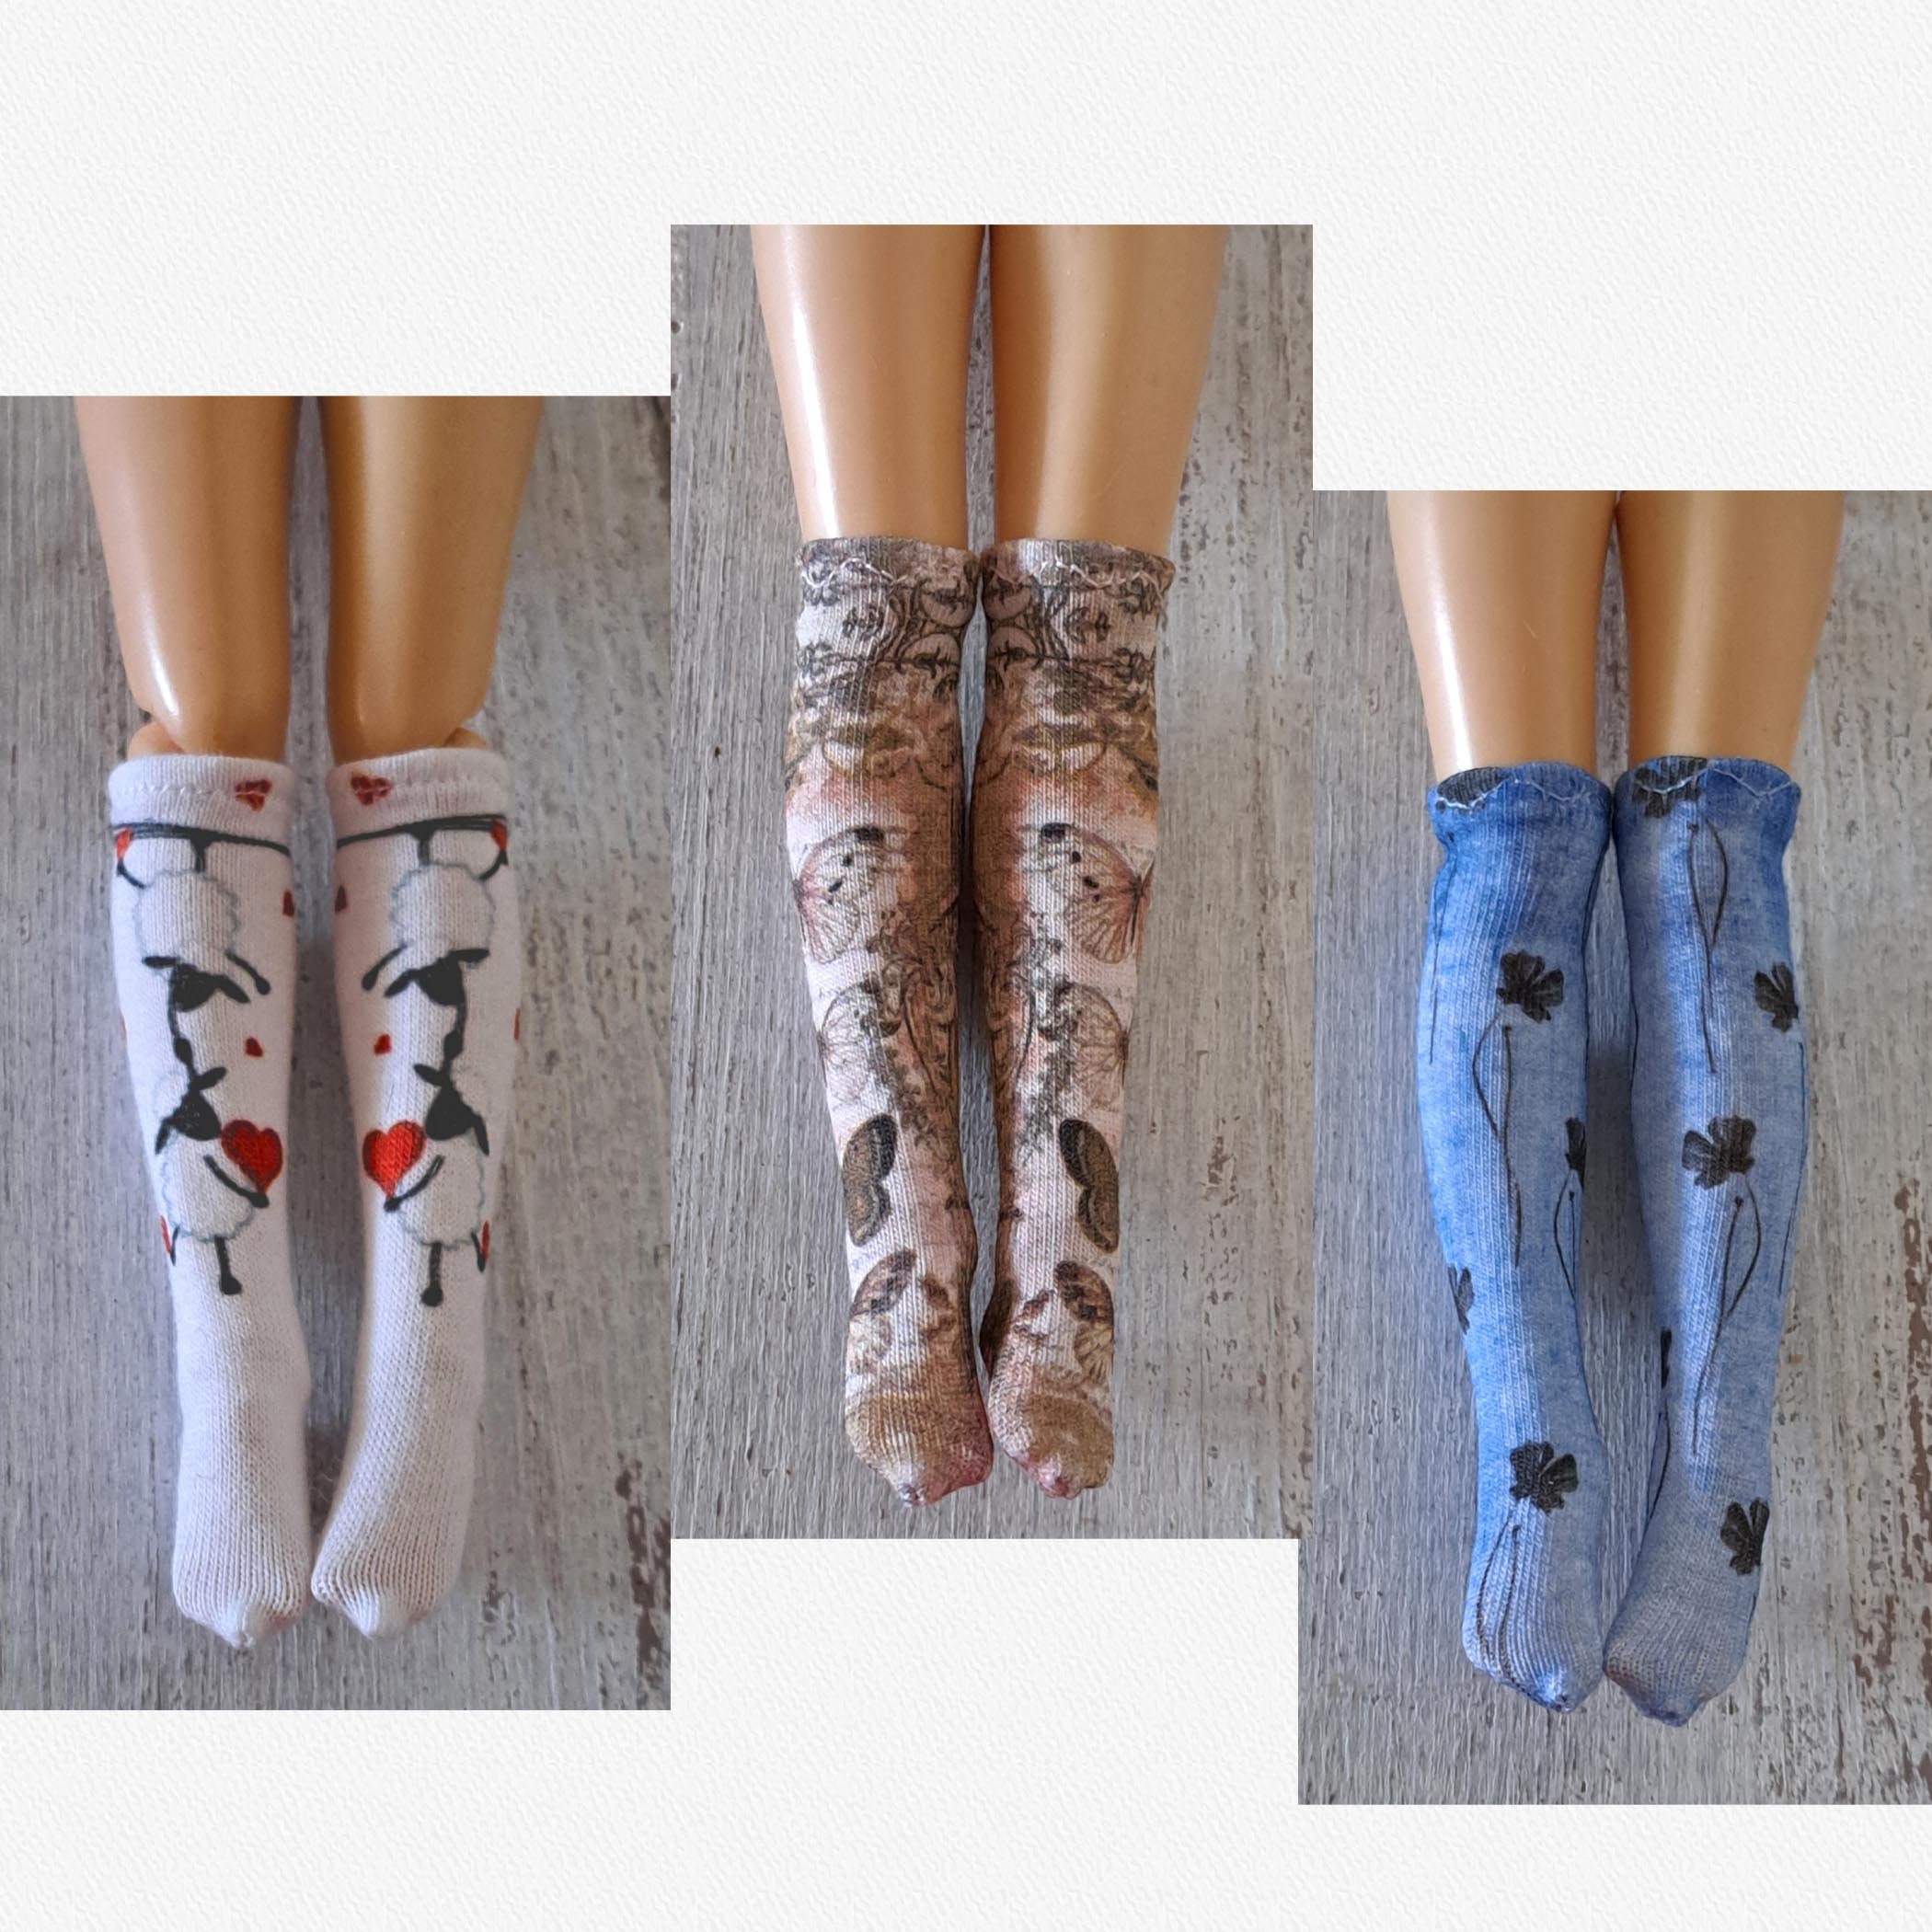 Leg-cessories Tights Socks Stocking Leggings Easy Clothes Sewing Pattern  for Petite Curvy Dolls: Rainbow Fashion Doll 